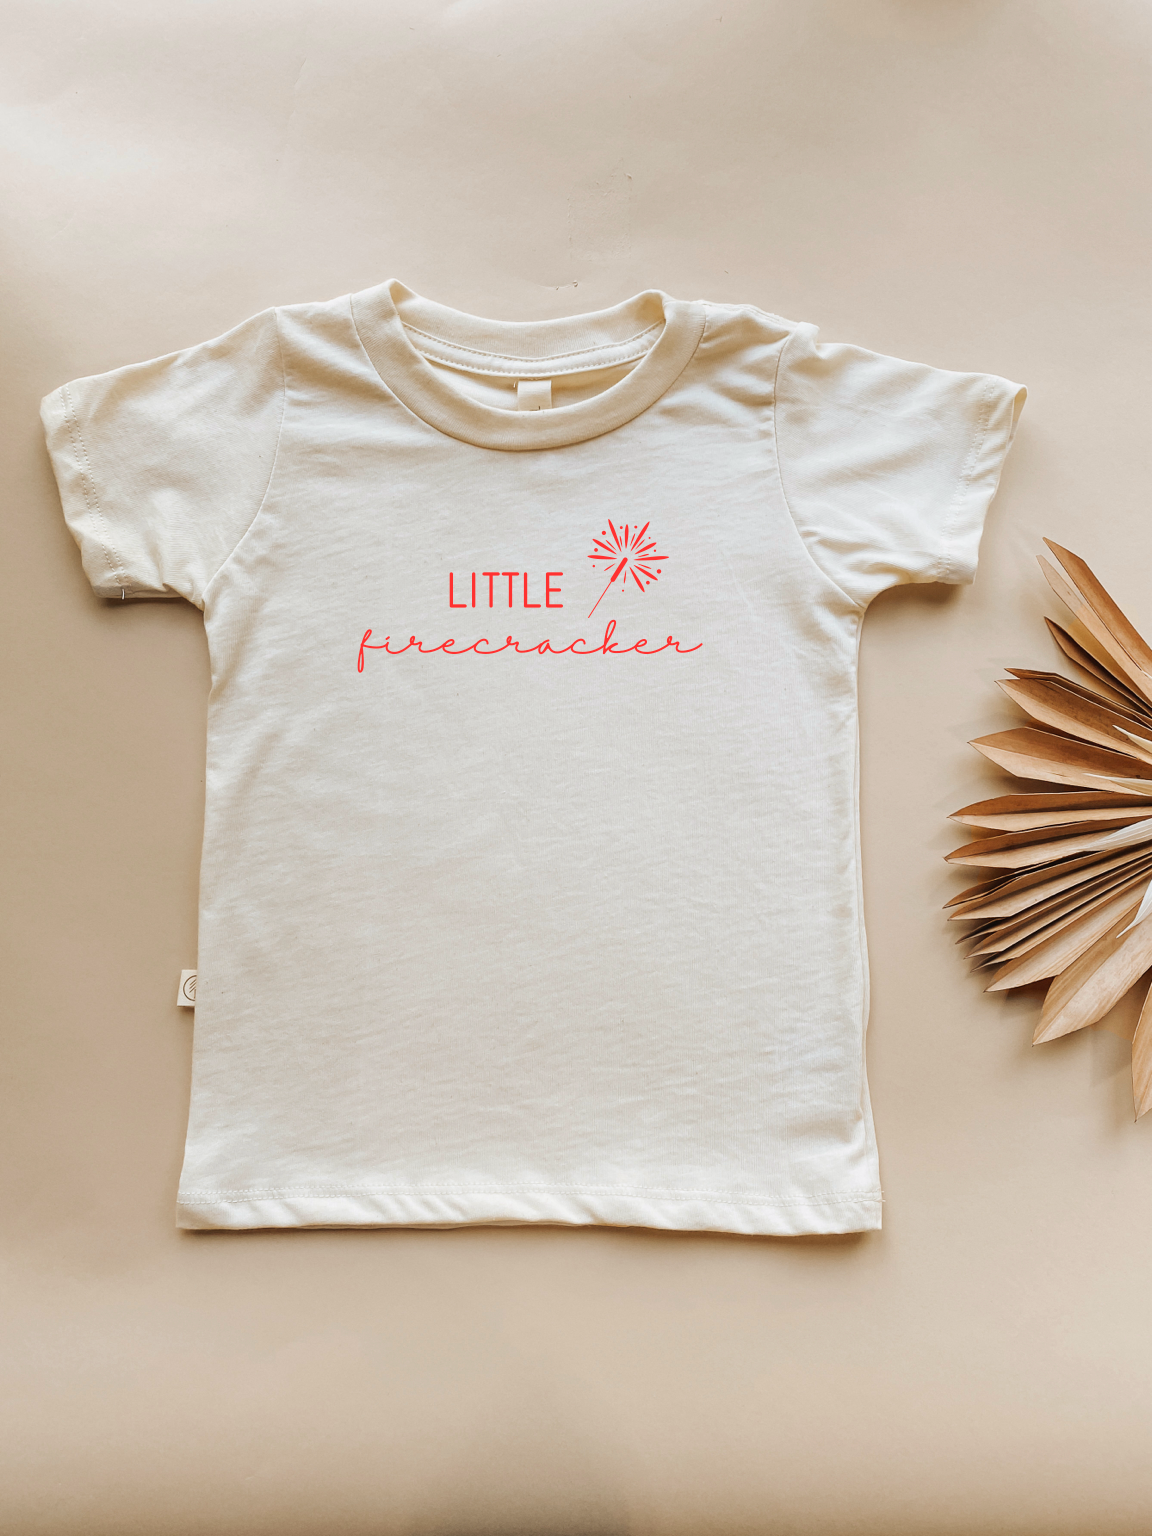 6T | Toddler Crew Neck Tee | Little Firecracker in Red | Organic Cotton